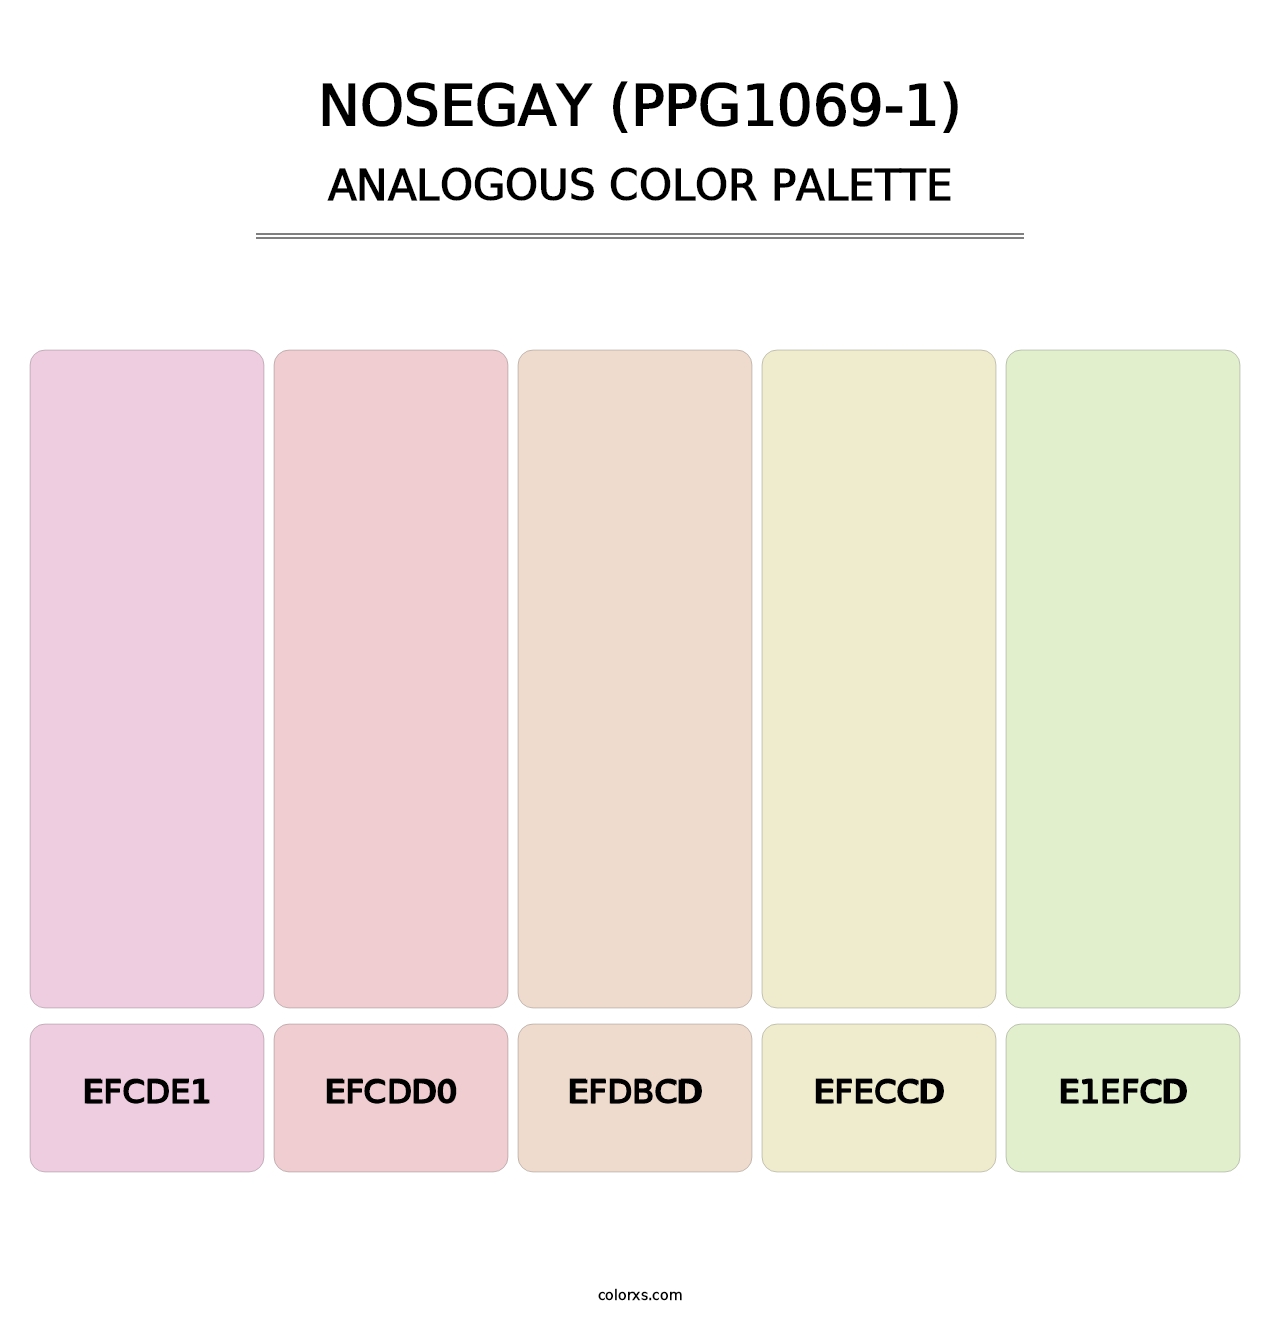 Nosegay (PPG1069-1) - Analogous Color Palette